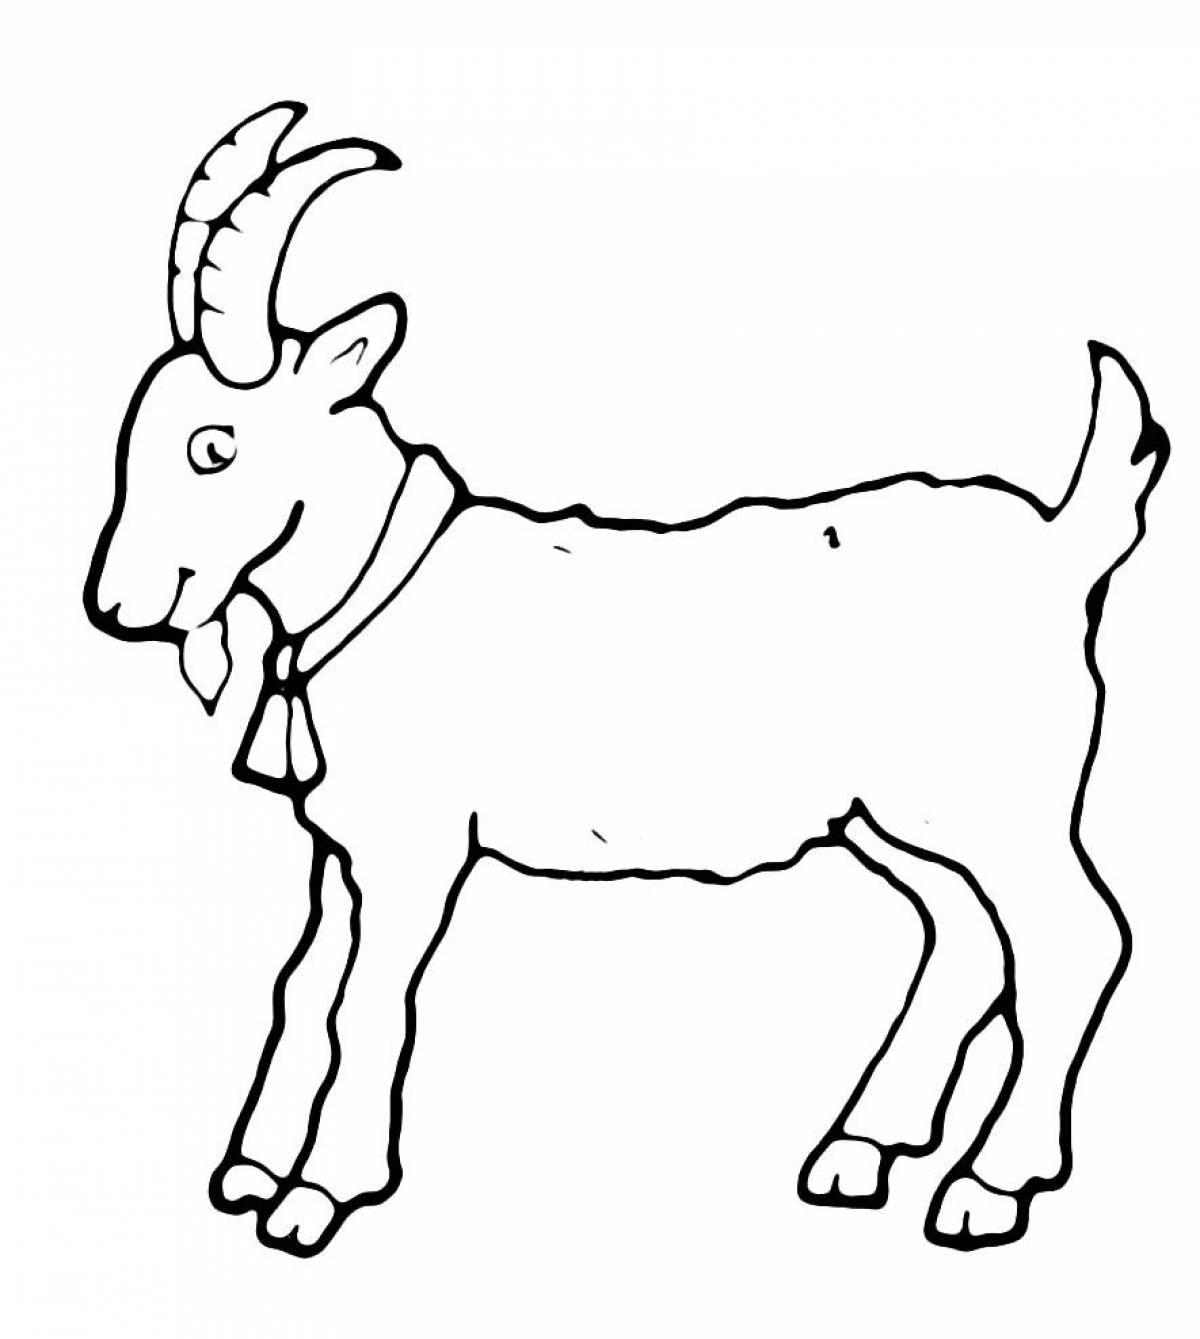 Goat #11